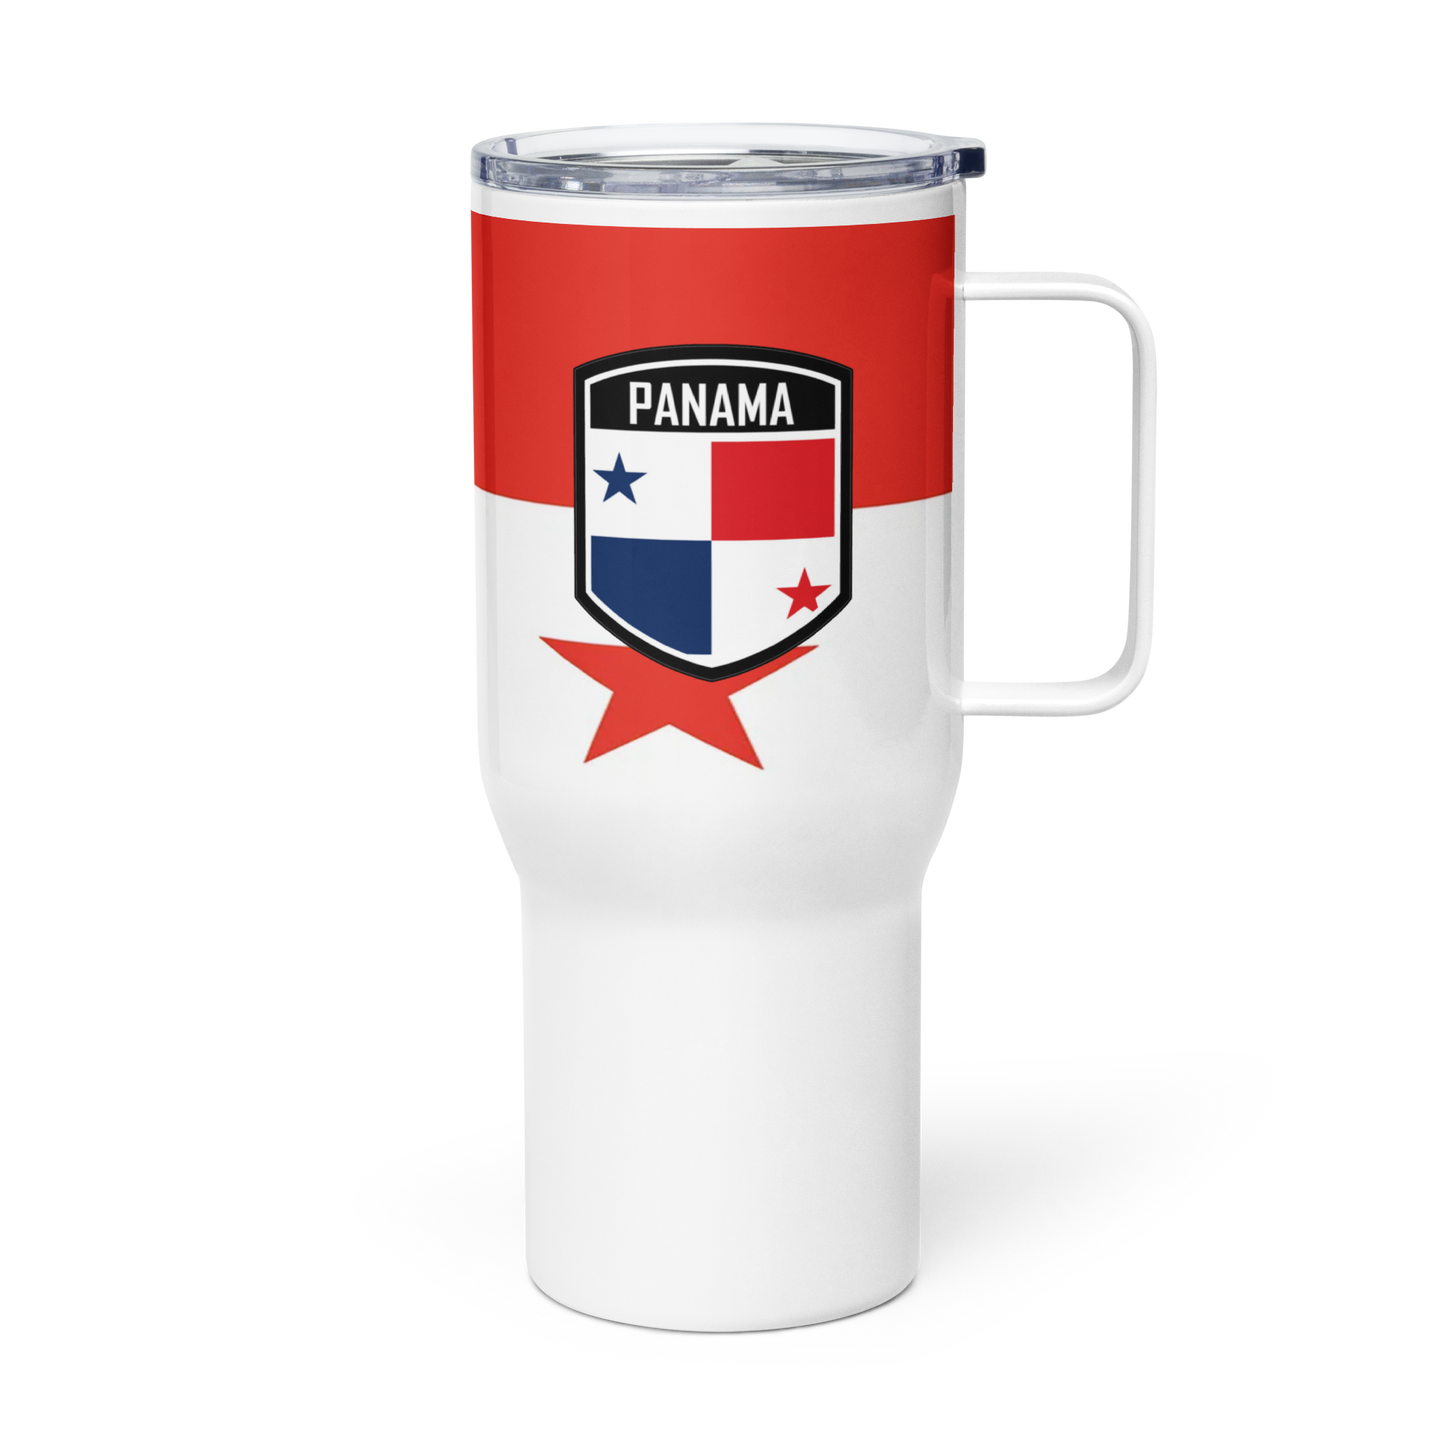 Panama Travel mug with a handle